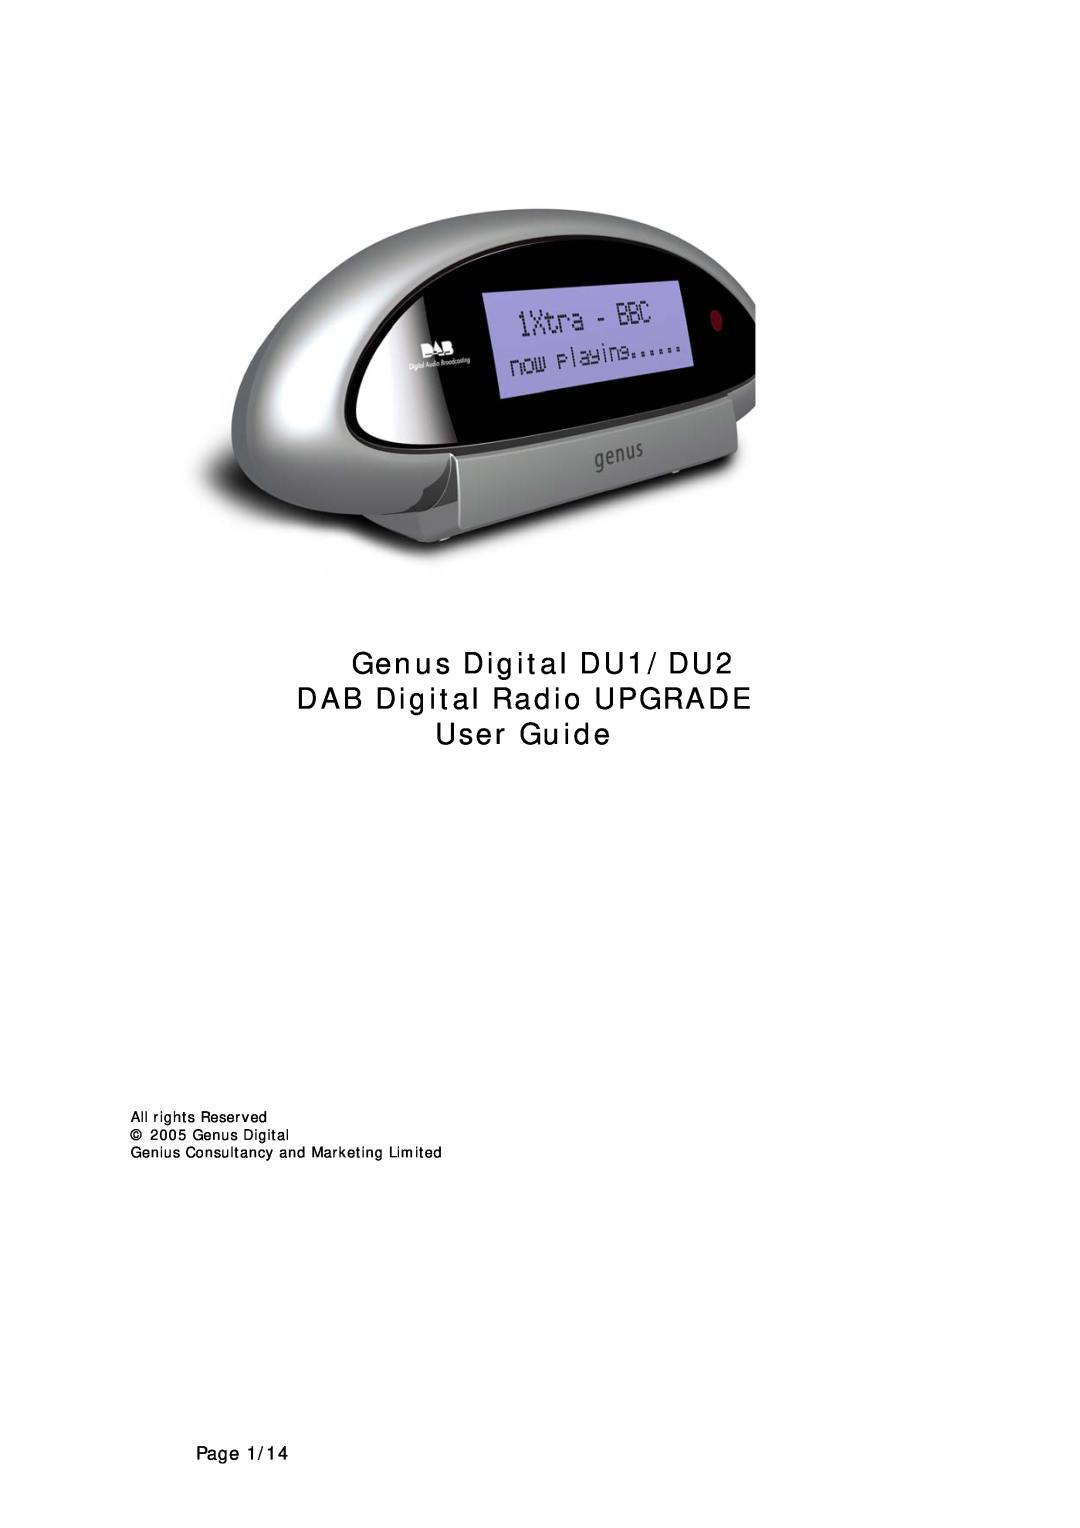 Genius manual Genus Digital DU1/DU2 DAB Digital Radio UPGRADE User Guide, Page 1/14 